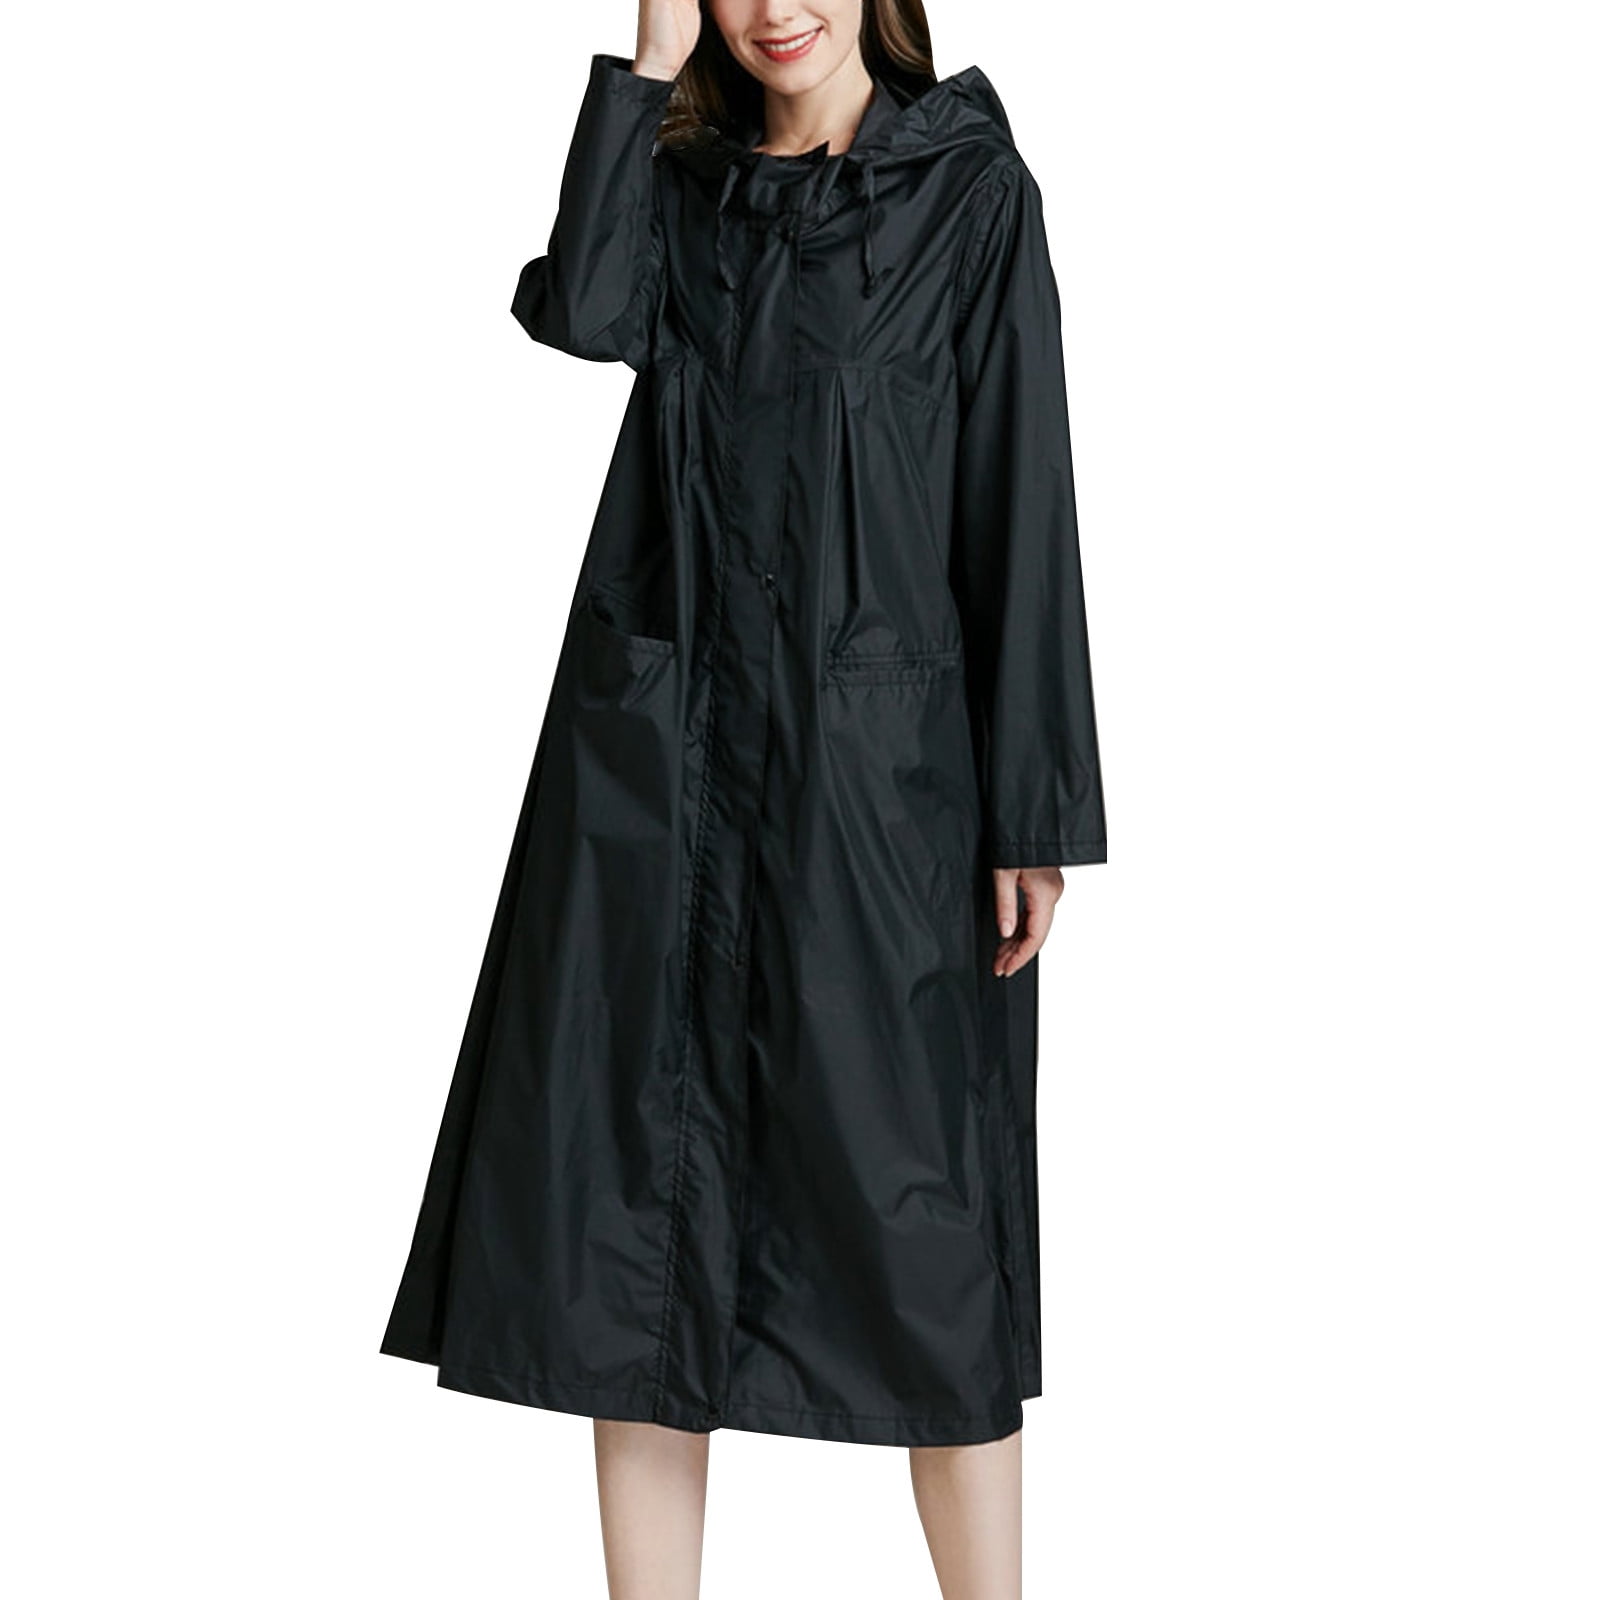 YUHAOTIN Emergency Poncho Ladies' Stylish Solid Color Fashion Raincoat ...